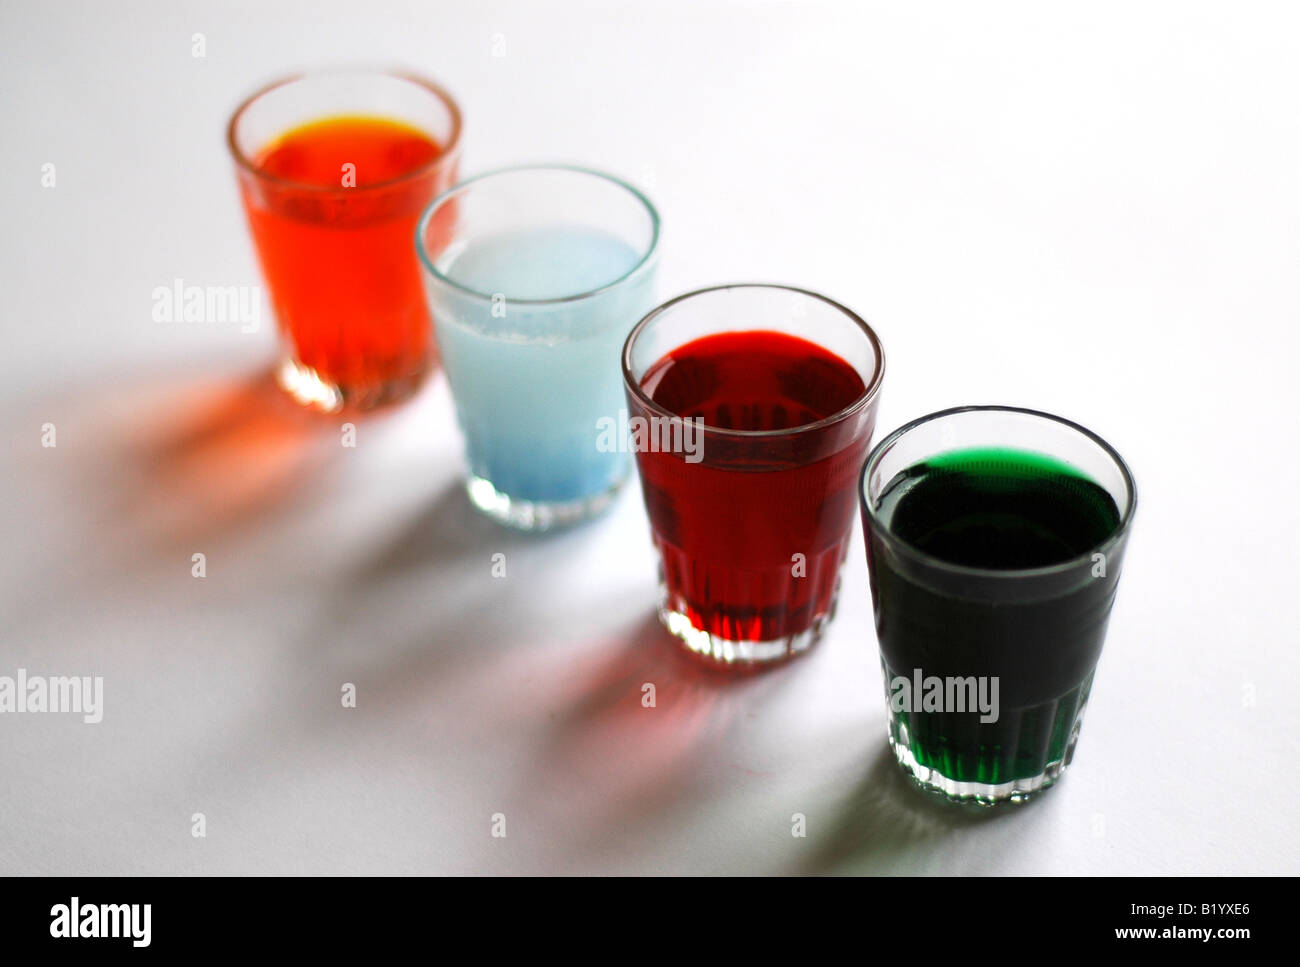 4 verres remplis de liquides colorés Banque D'Images